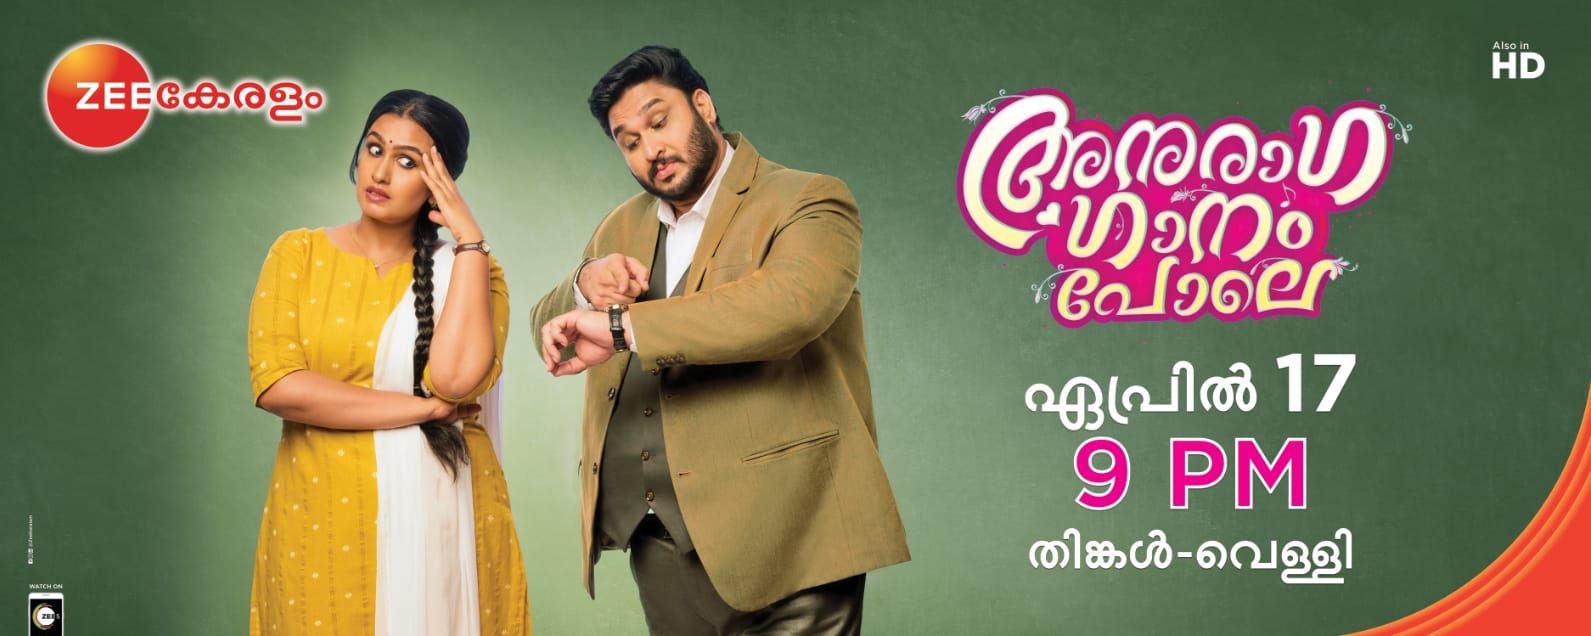 Sa Re Ga Ma Pa Keralam Season 2 Audition Details - Zee Keralam Channel Reality Show 4